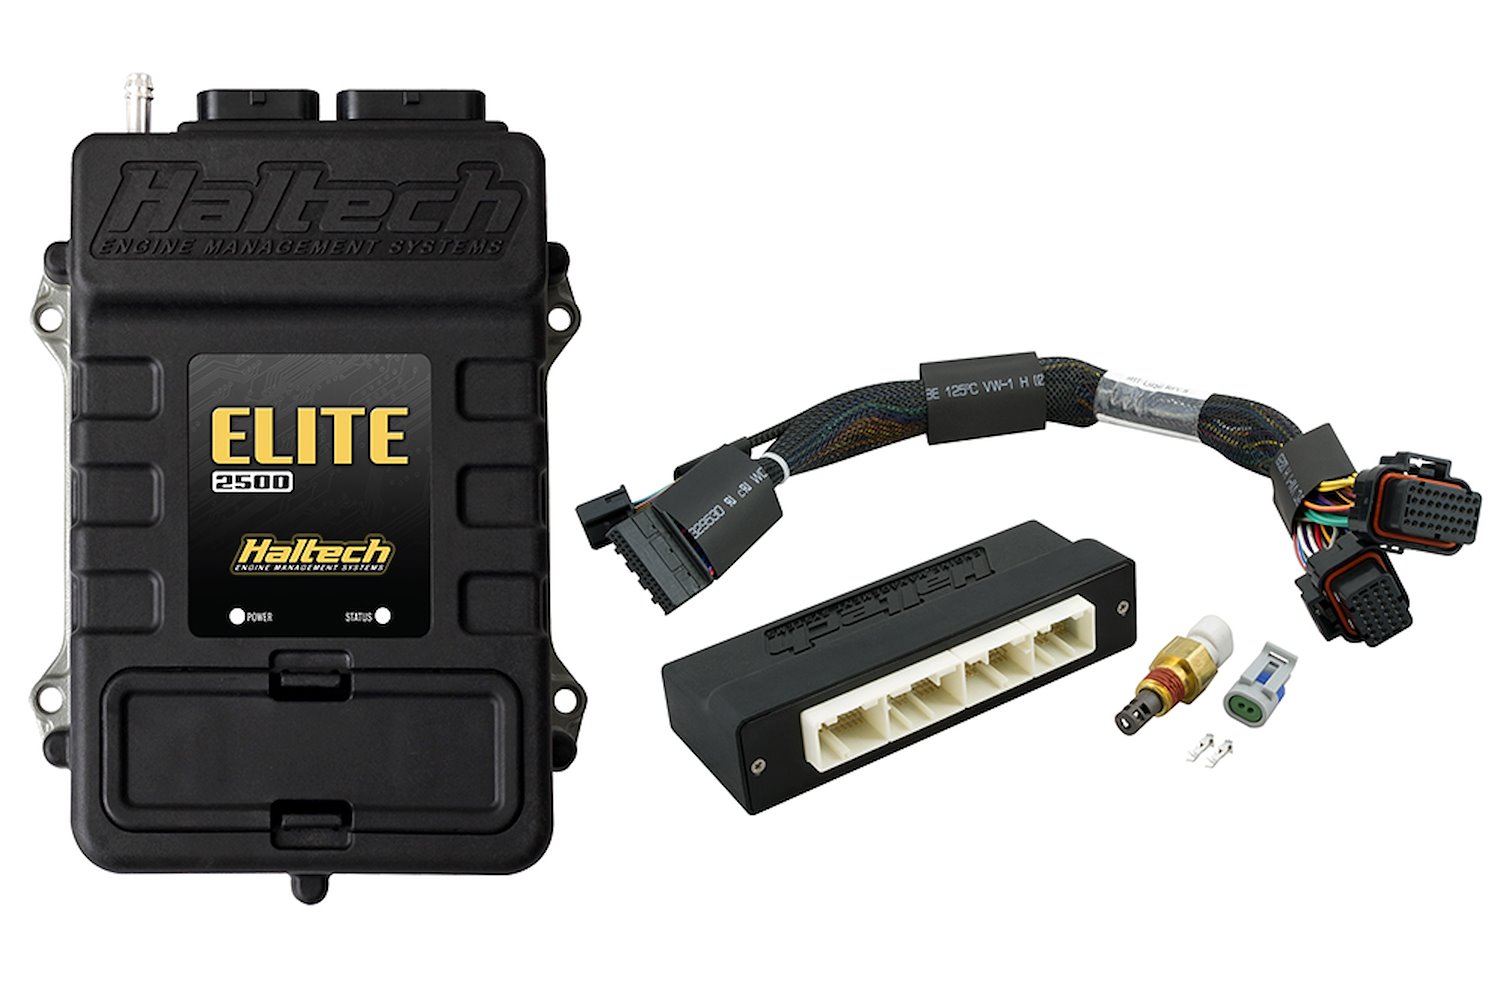 HT-151356 Elite 2500 Plug-and-Play Adaptor Kit, 04-05 Subaru Liberty 3.0R & GT